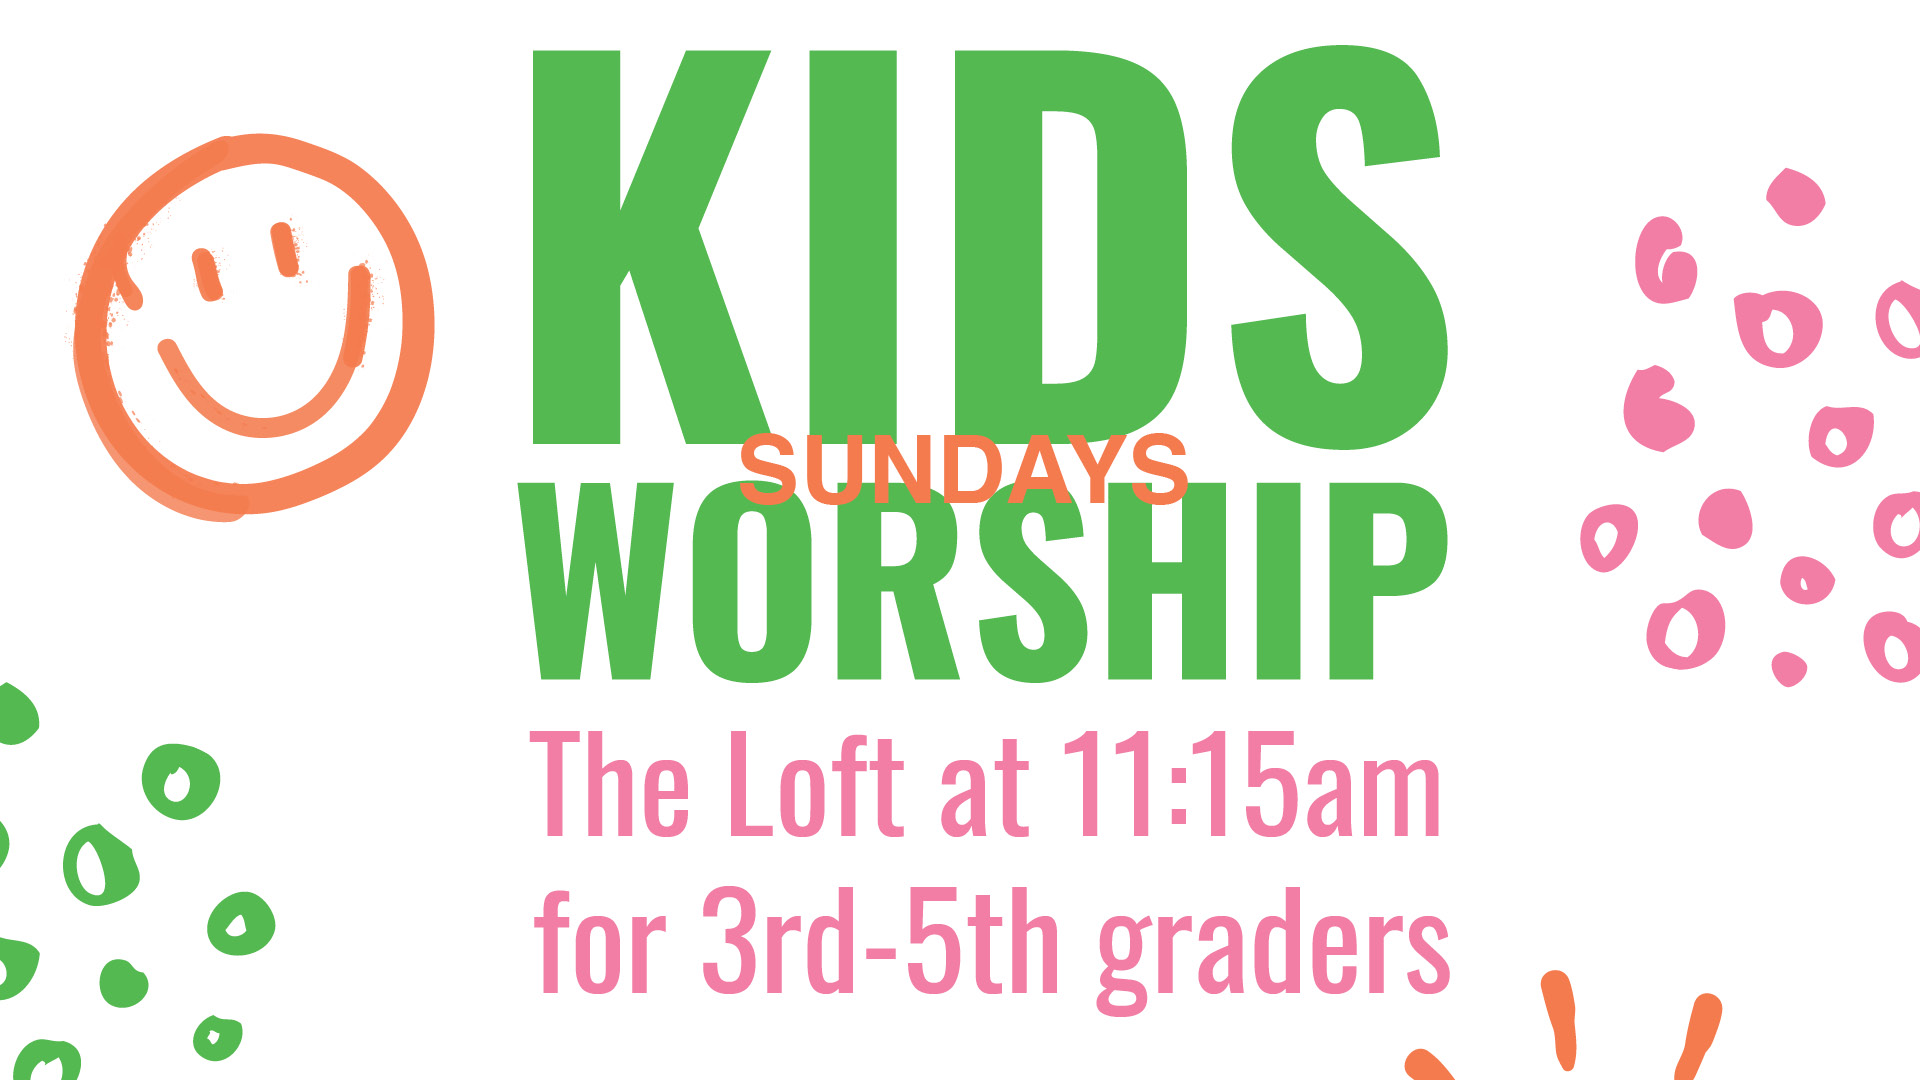 Kids Worship Sundays at 11:15